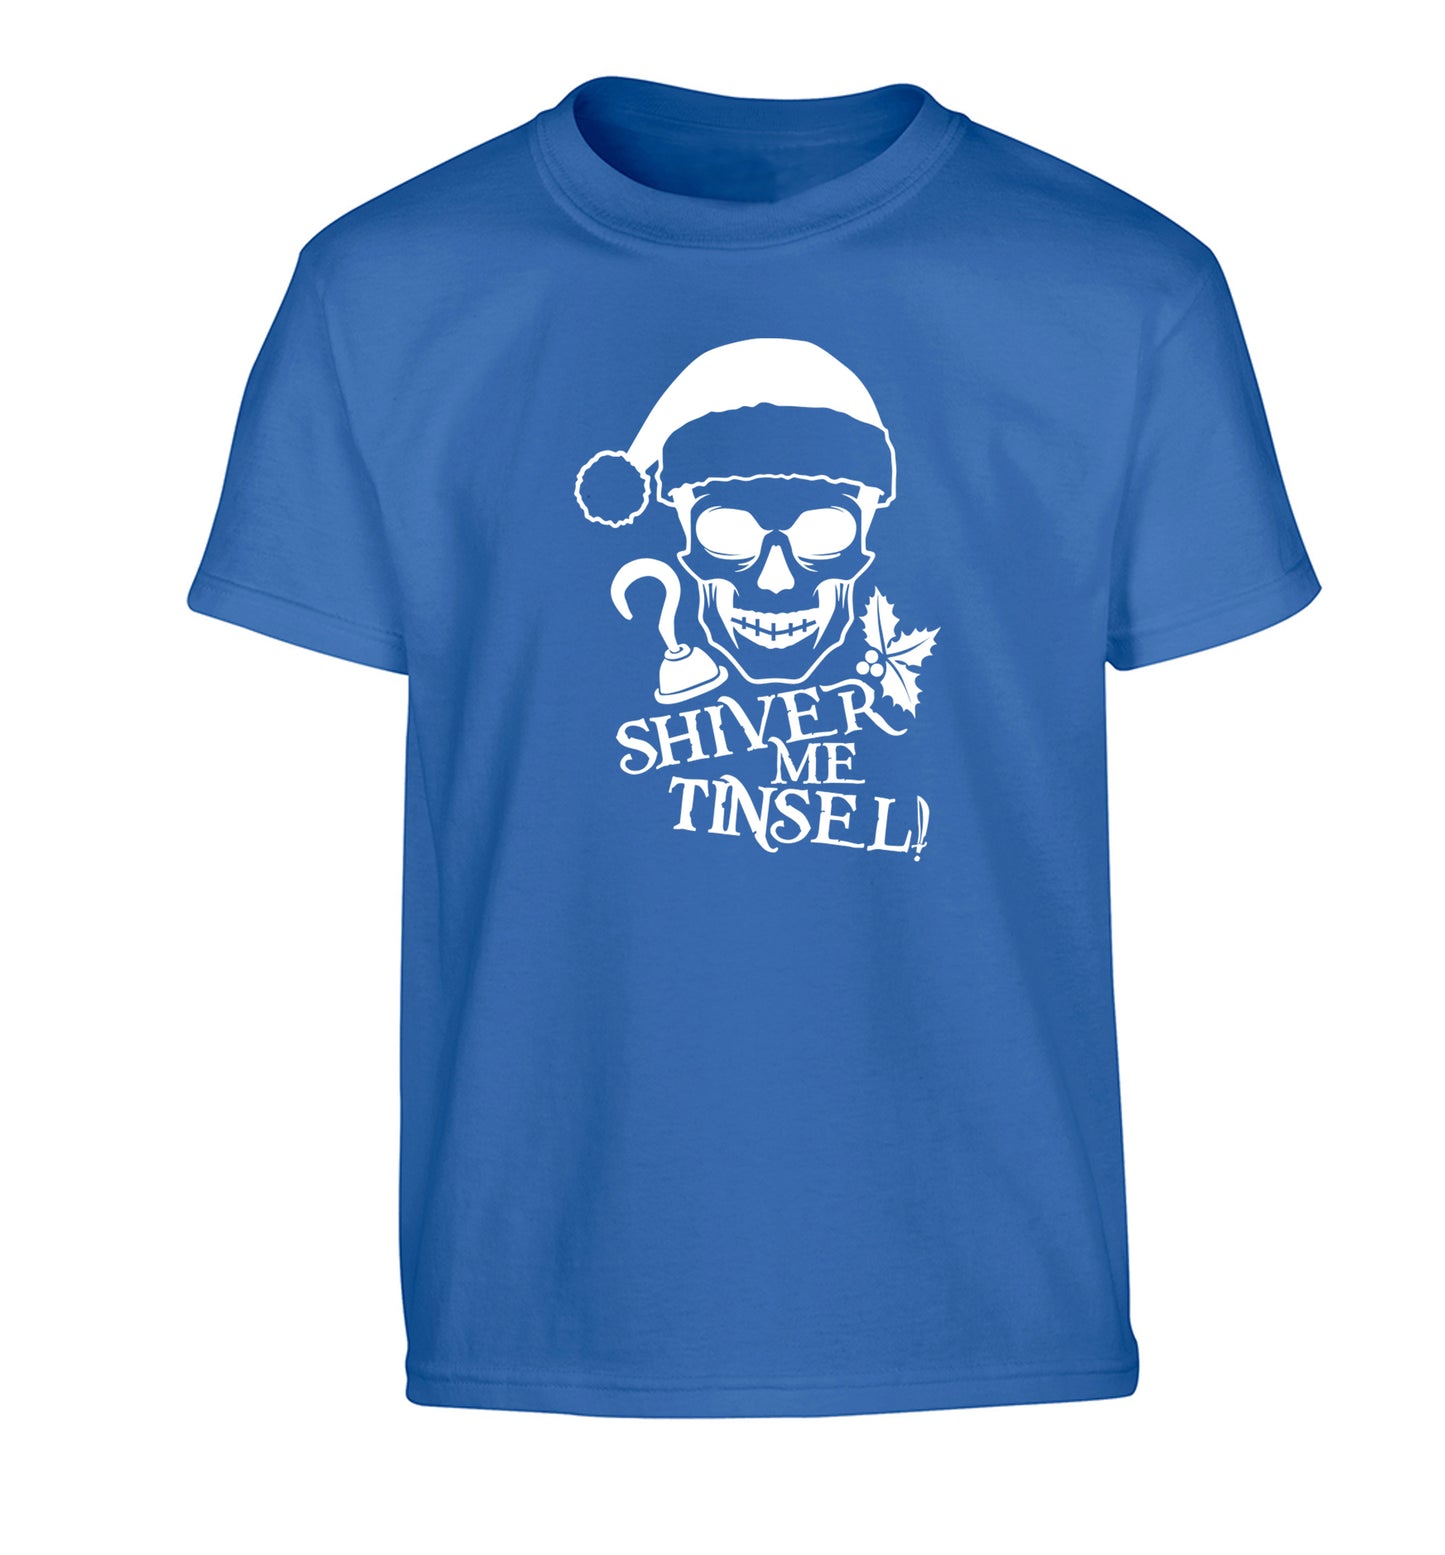 Shiver me tinsel Children's blue Tshirt 12-14 Years